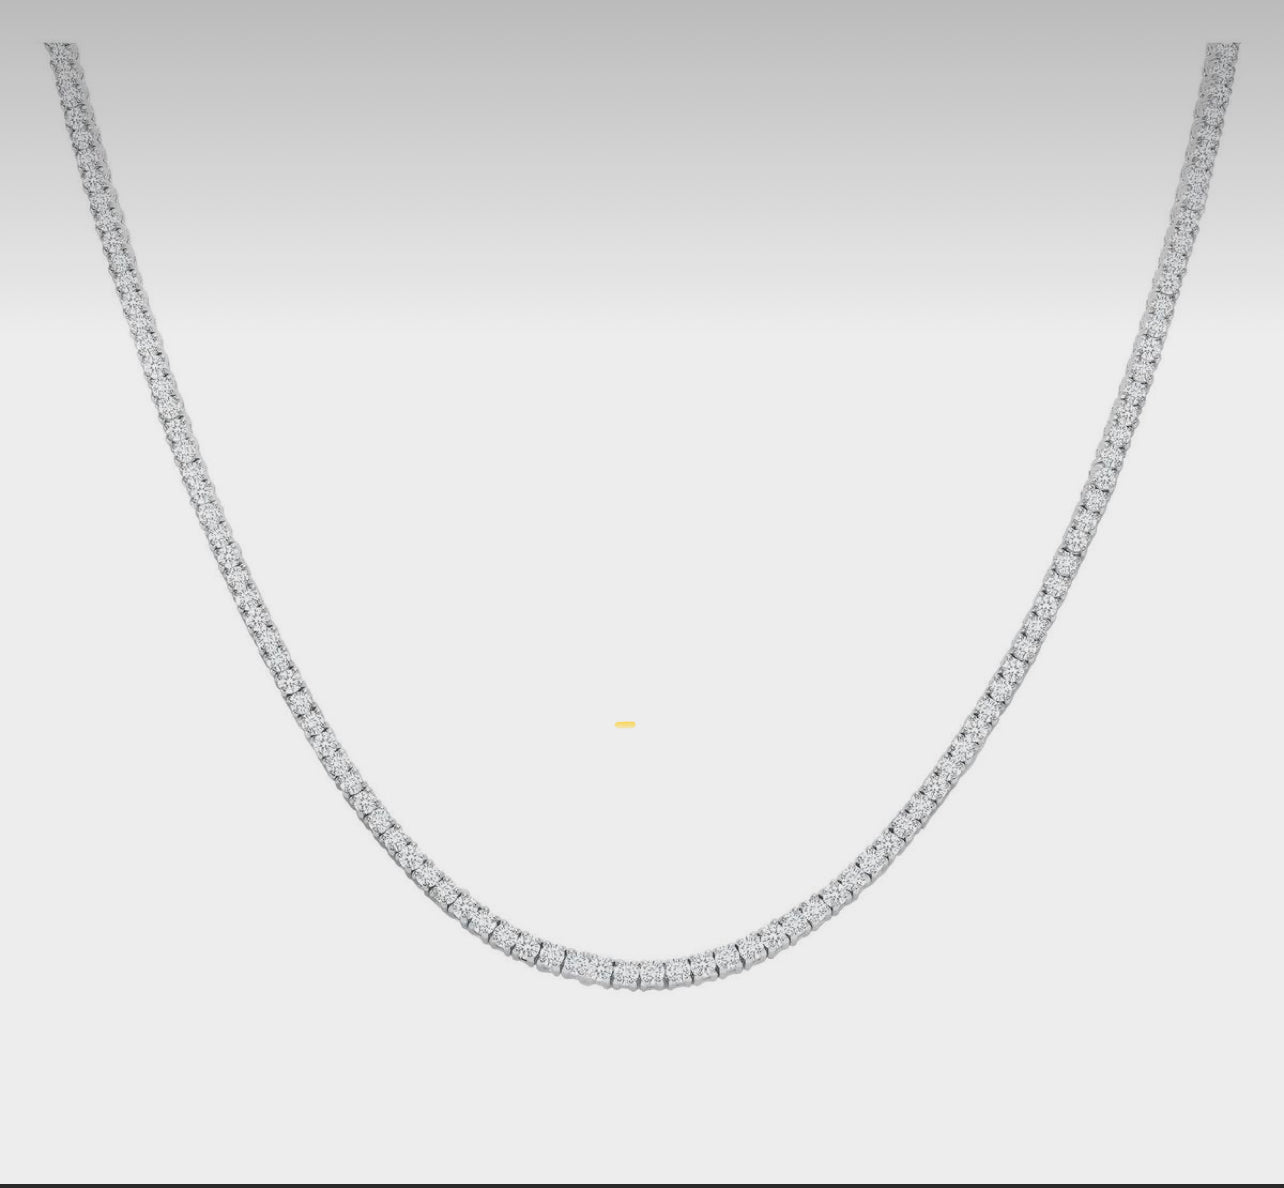 18k White Gold 10.93 Carat Diamond Tennis Necklace